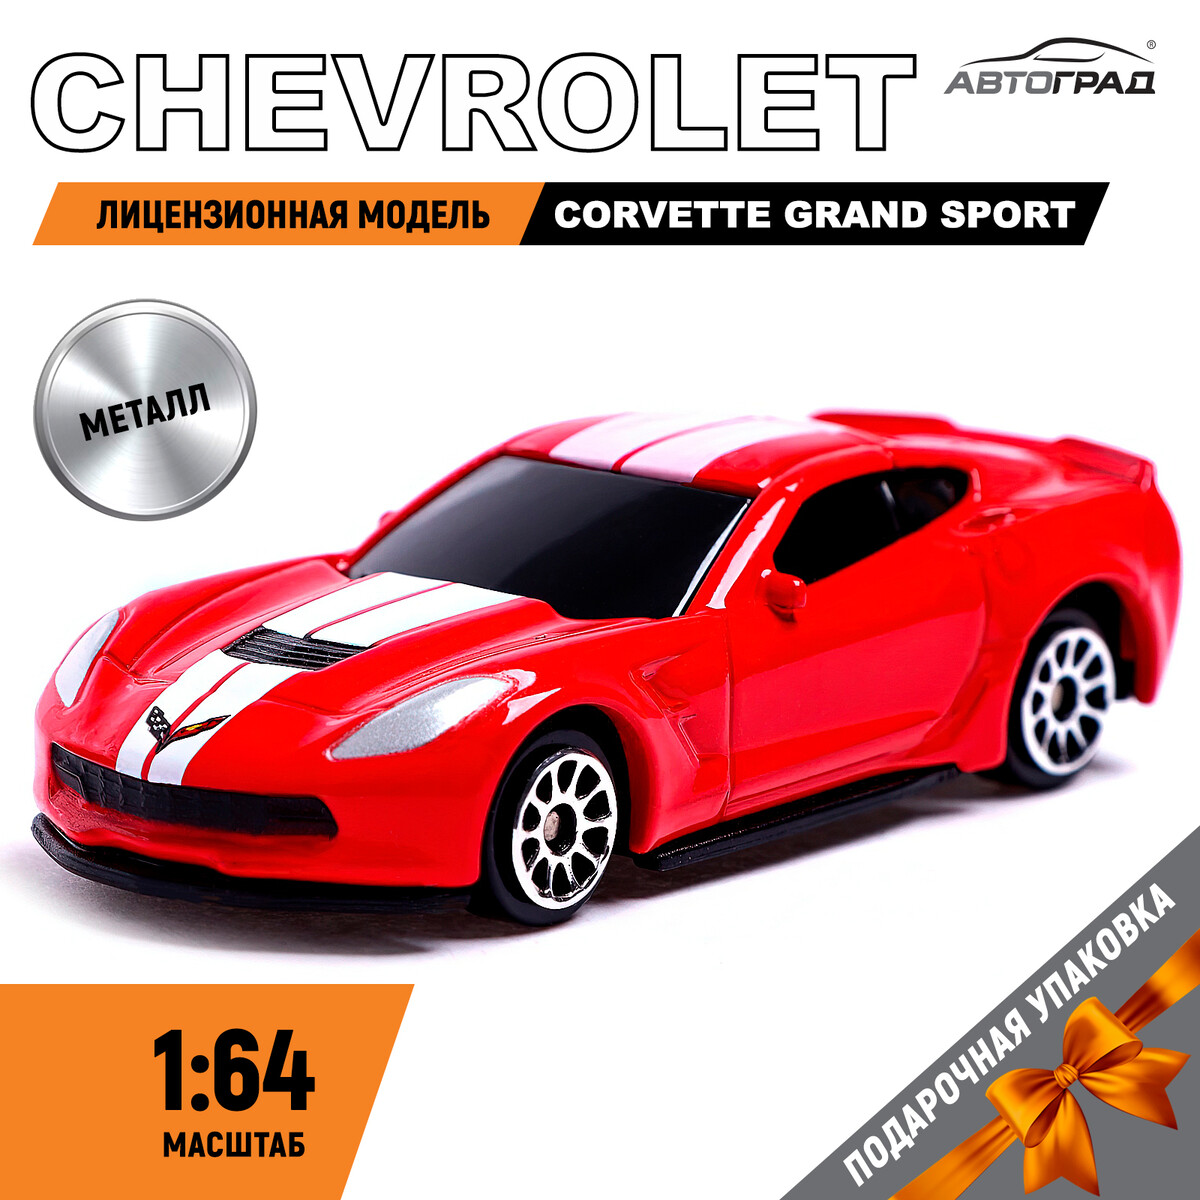 Машина металлическая chevrolet corvette grand sport, 1:64, цвет красный машина металлическая chevrolet corvette grand sport 1 64 синий